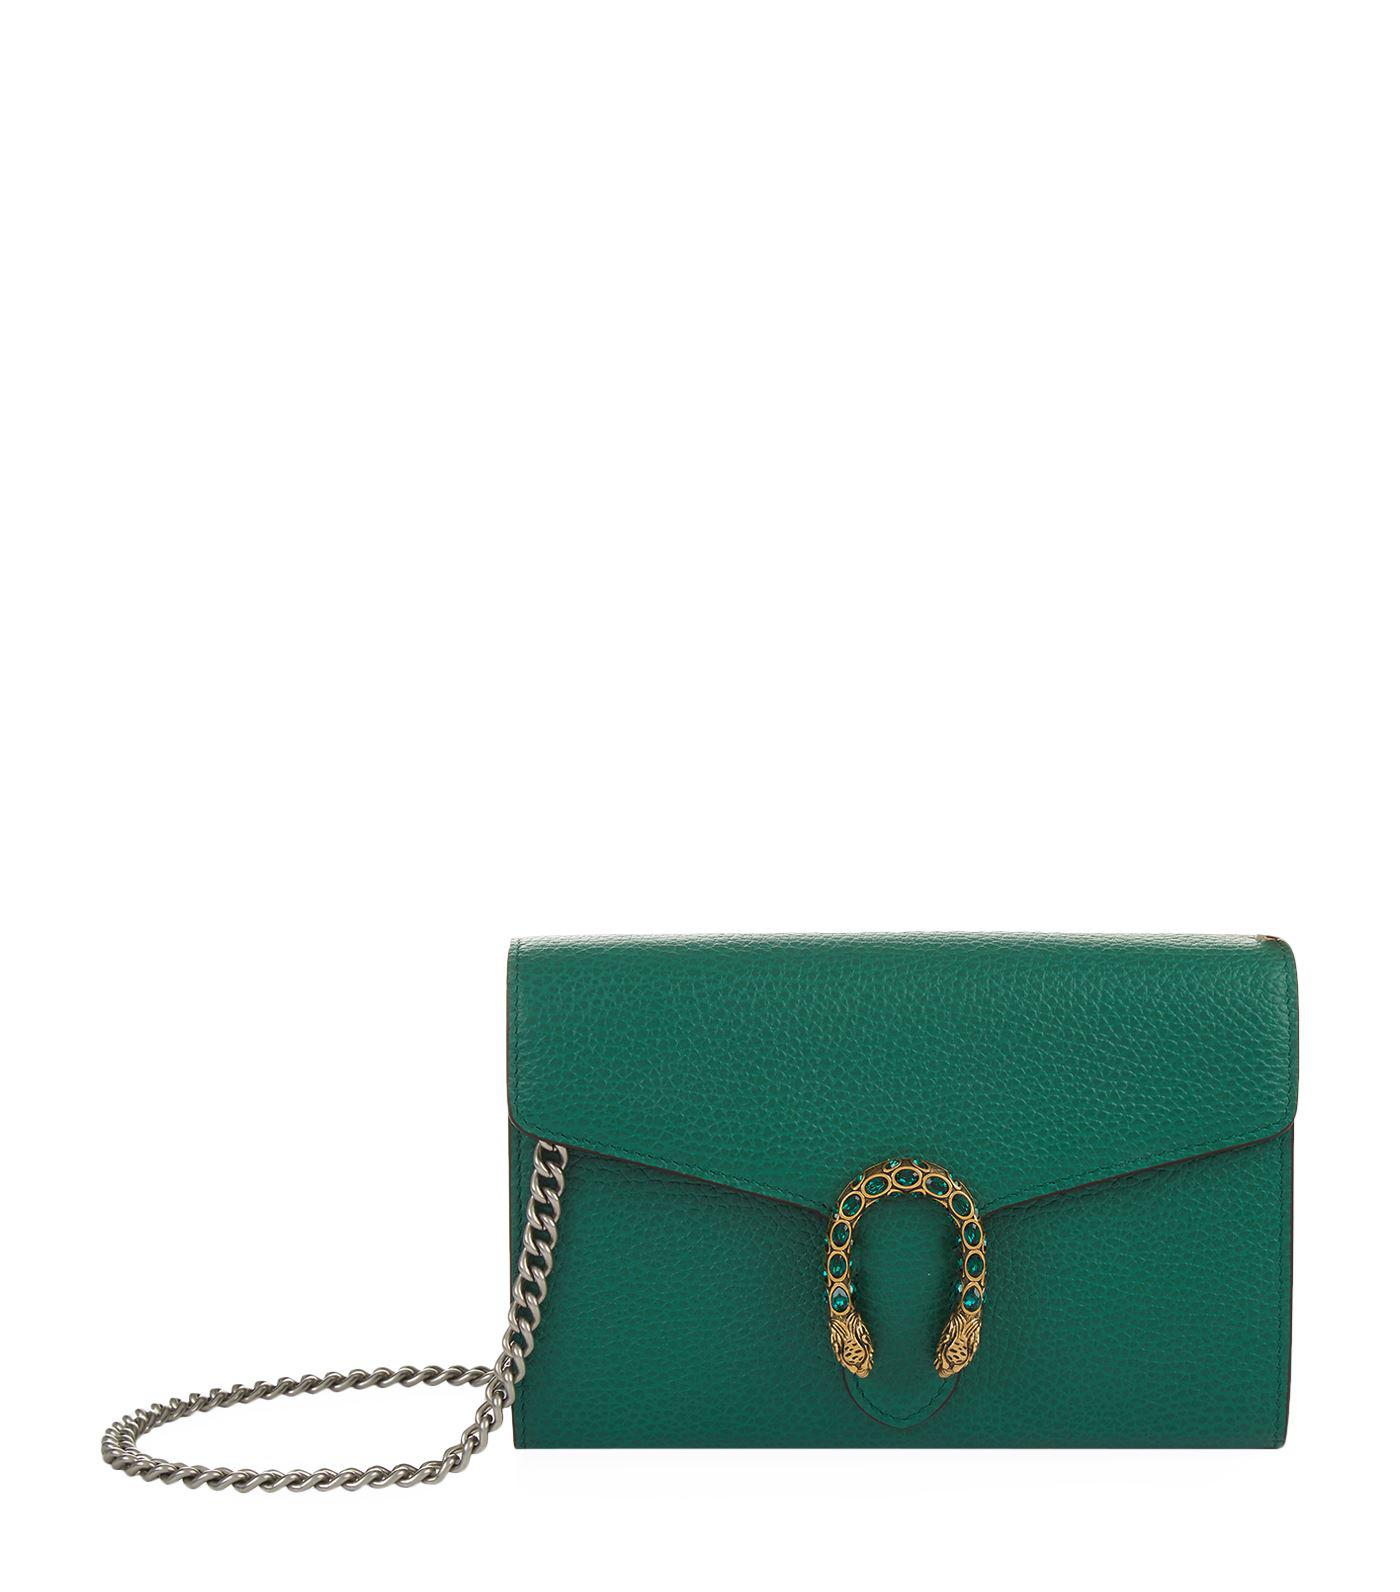 Gucci Mini Leather Dionysus Shoulder Bag in Green - Lyst